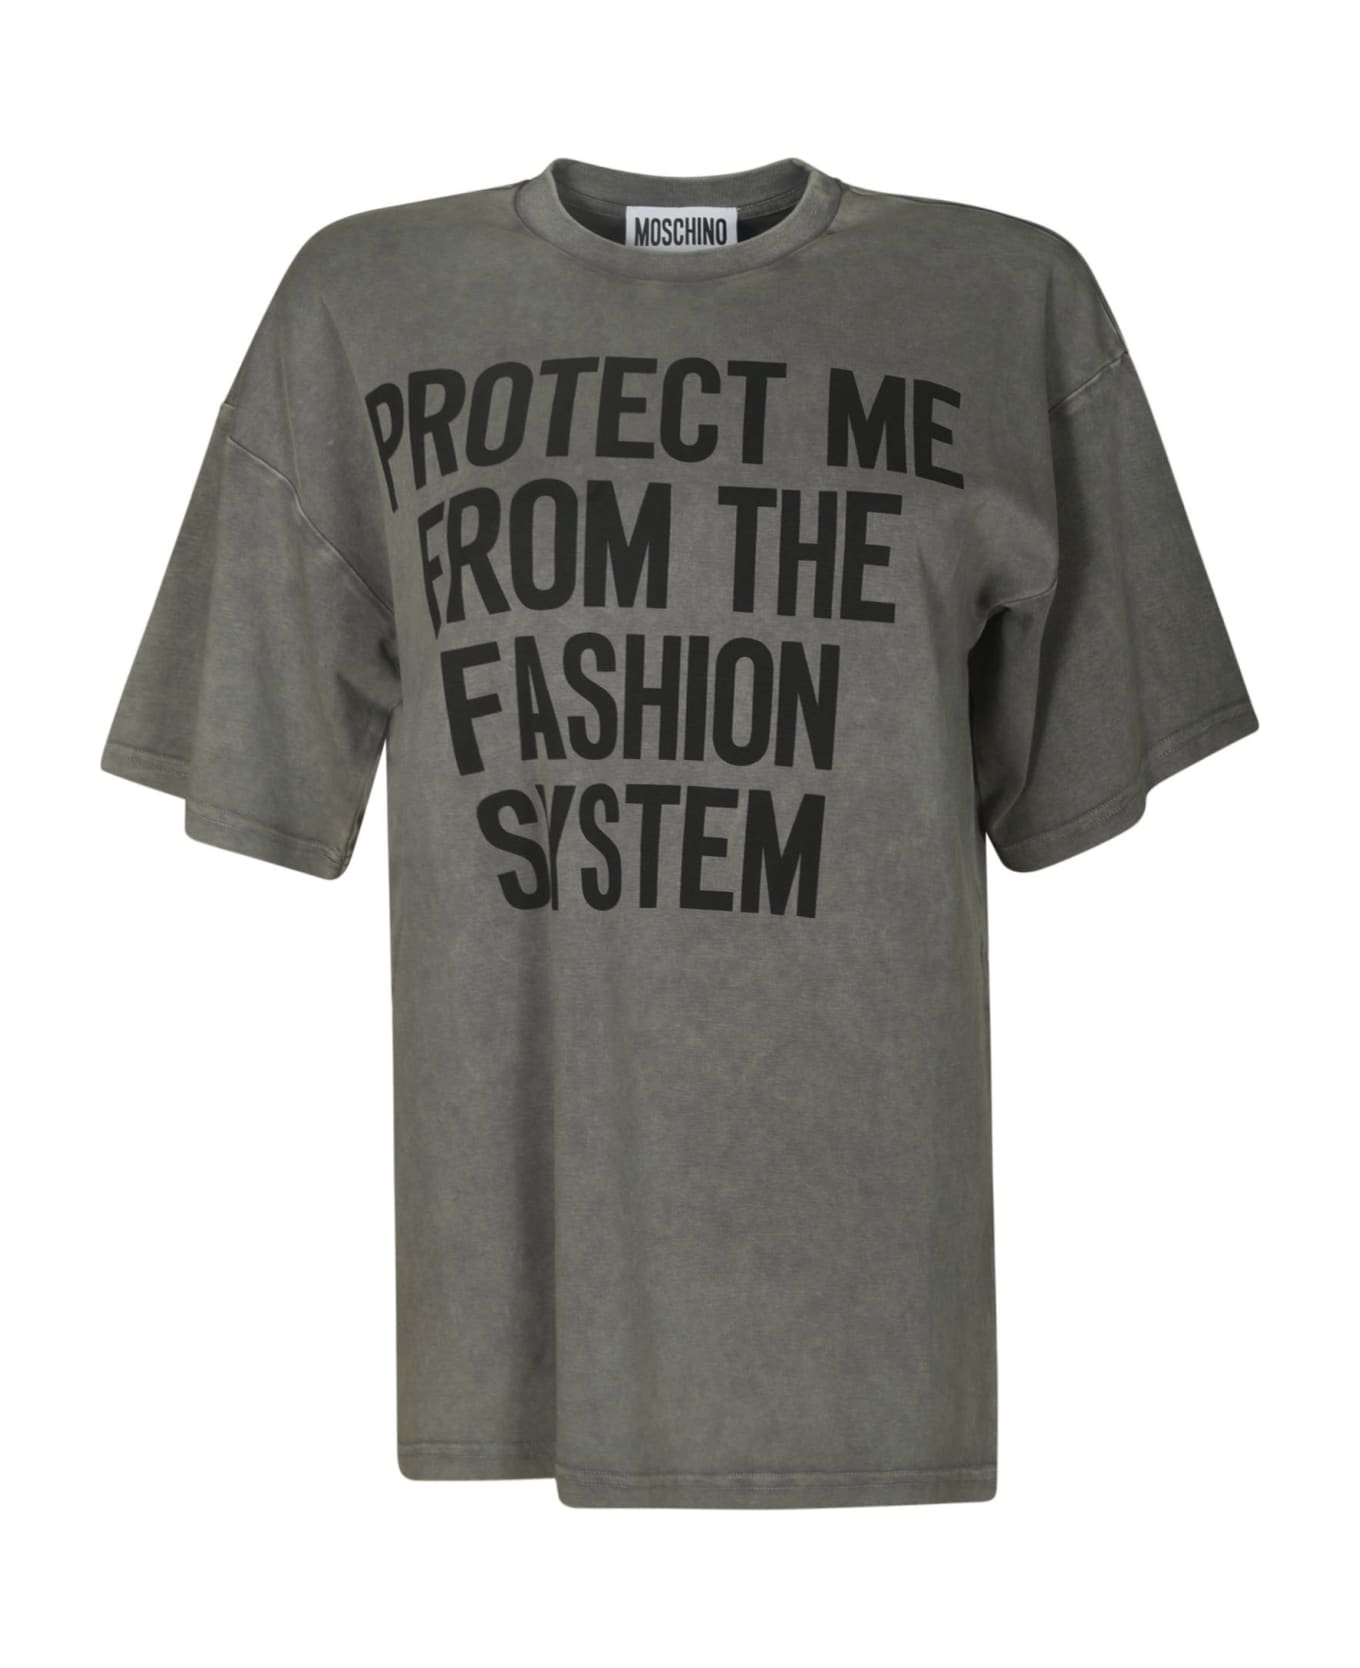 Moschino Protect Me T-shirt - 1888